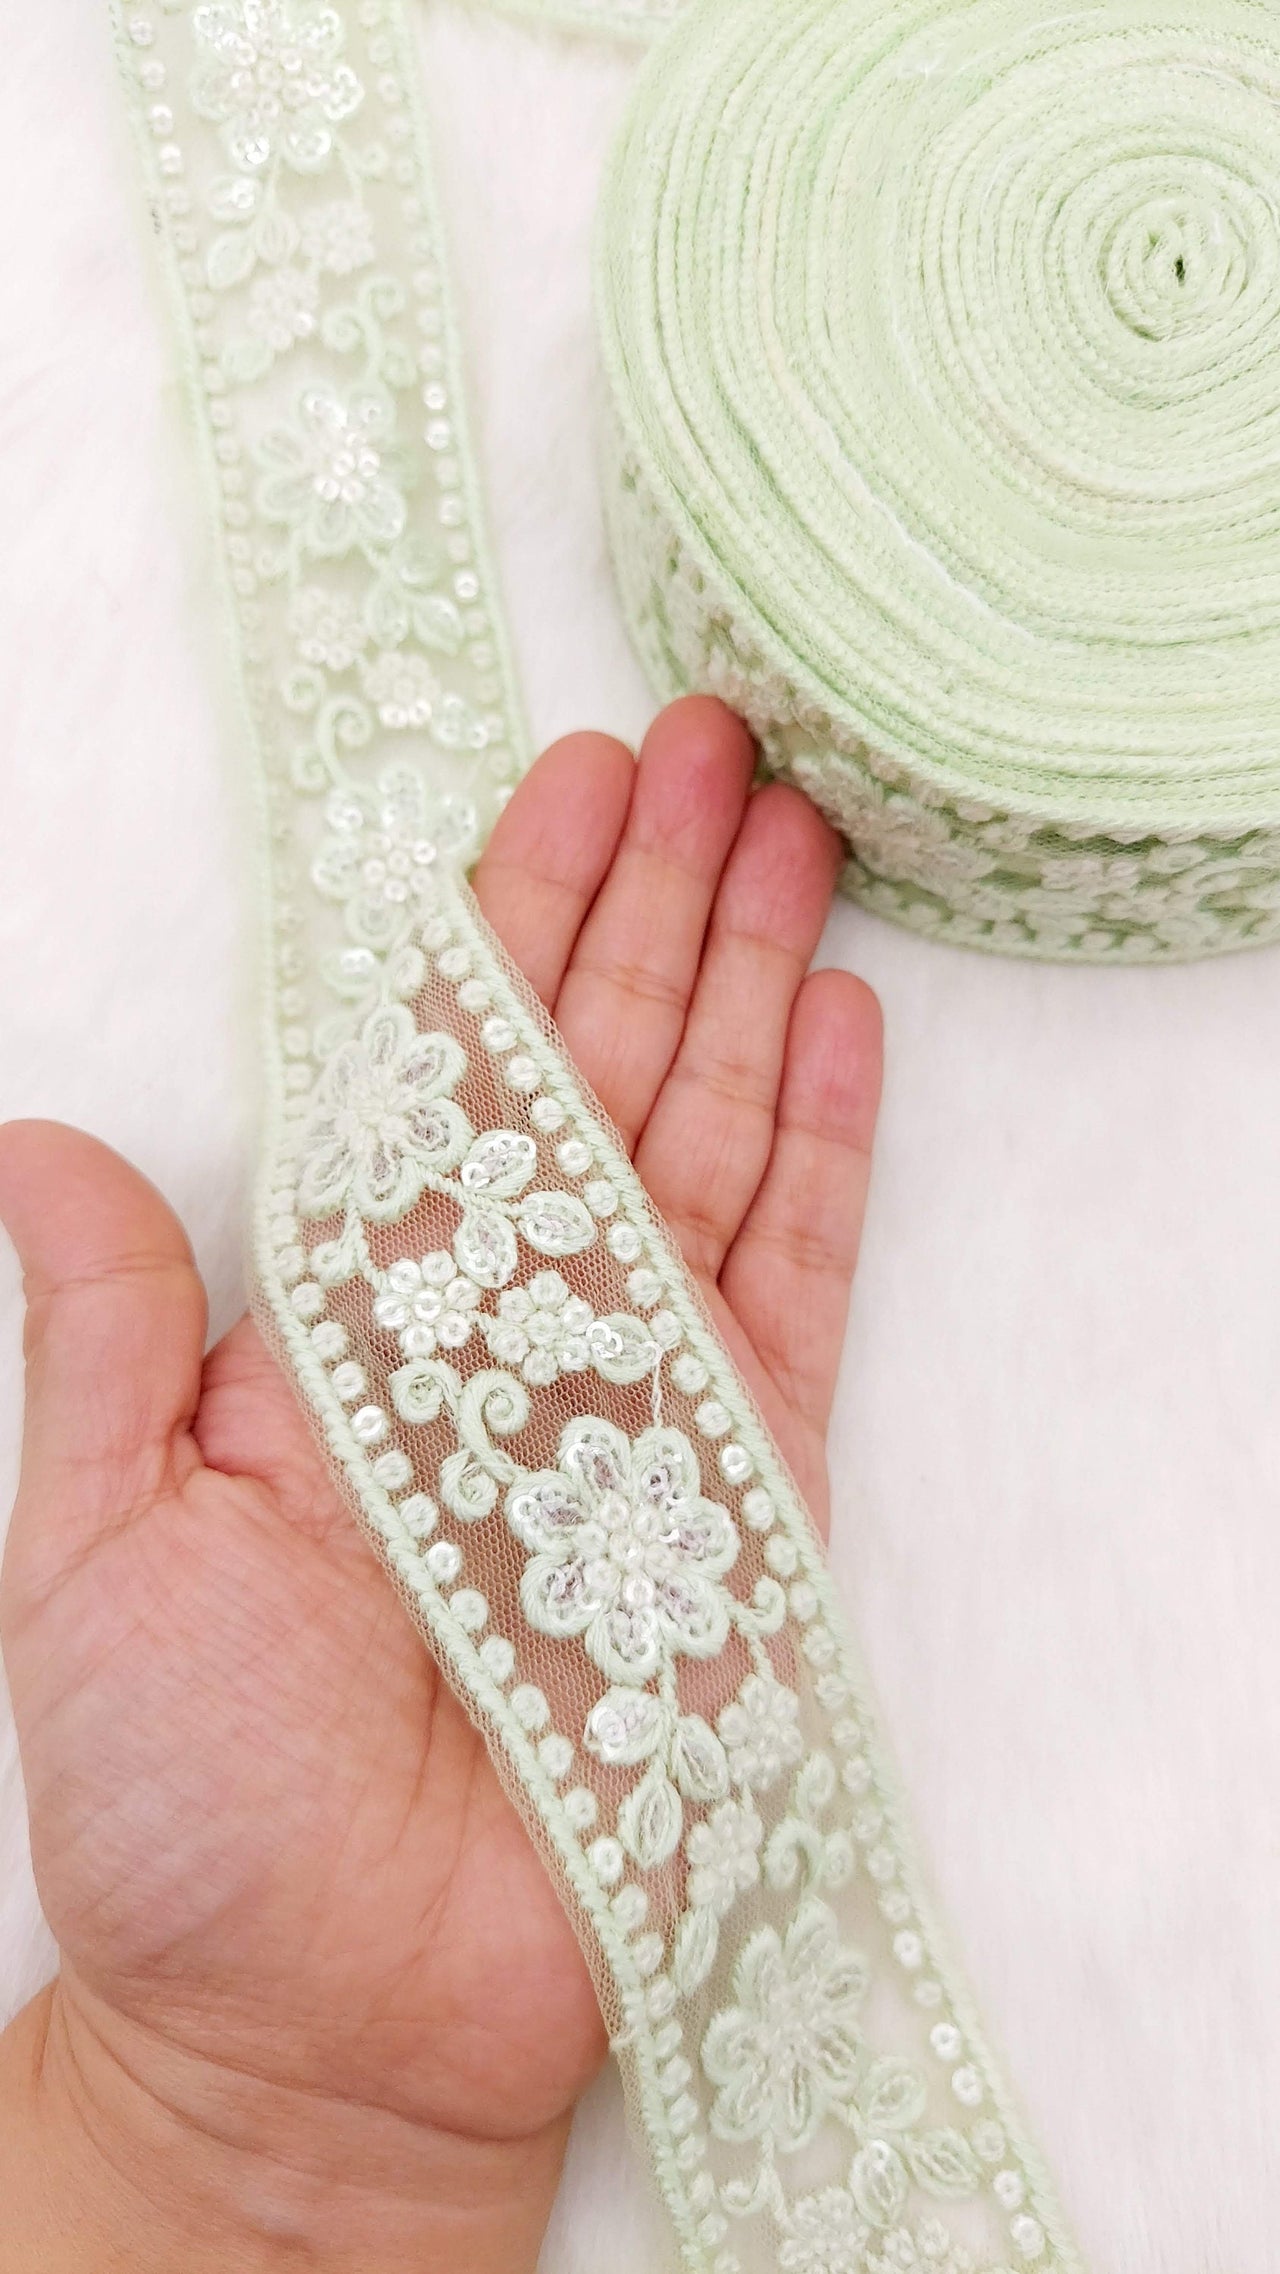 9 Yards Soft Net Lace Trim Floral Embroidery and Sequins, Floral Sari Border, Decorative Trim